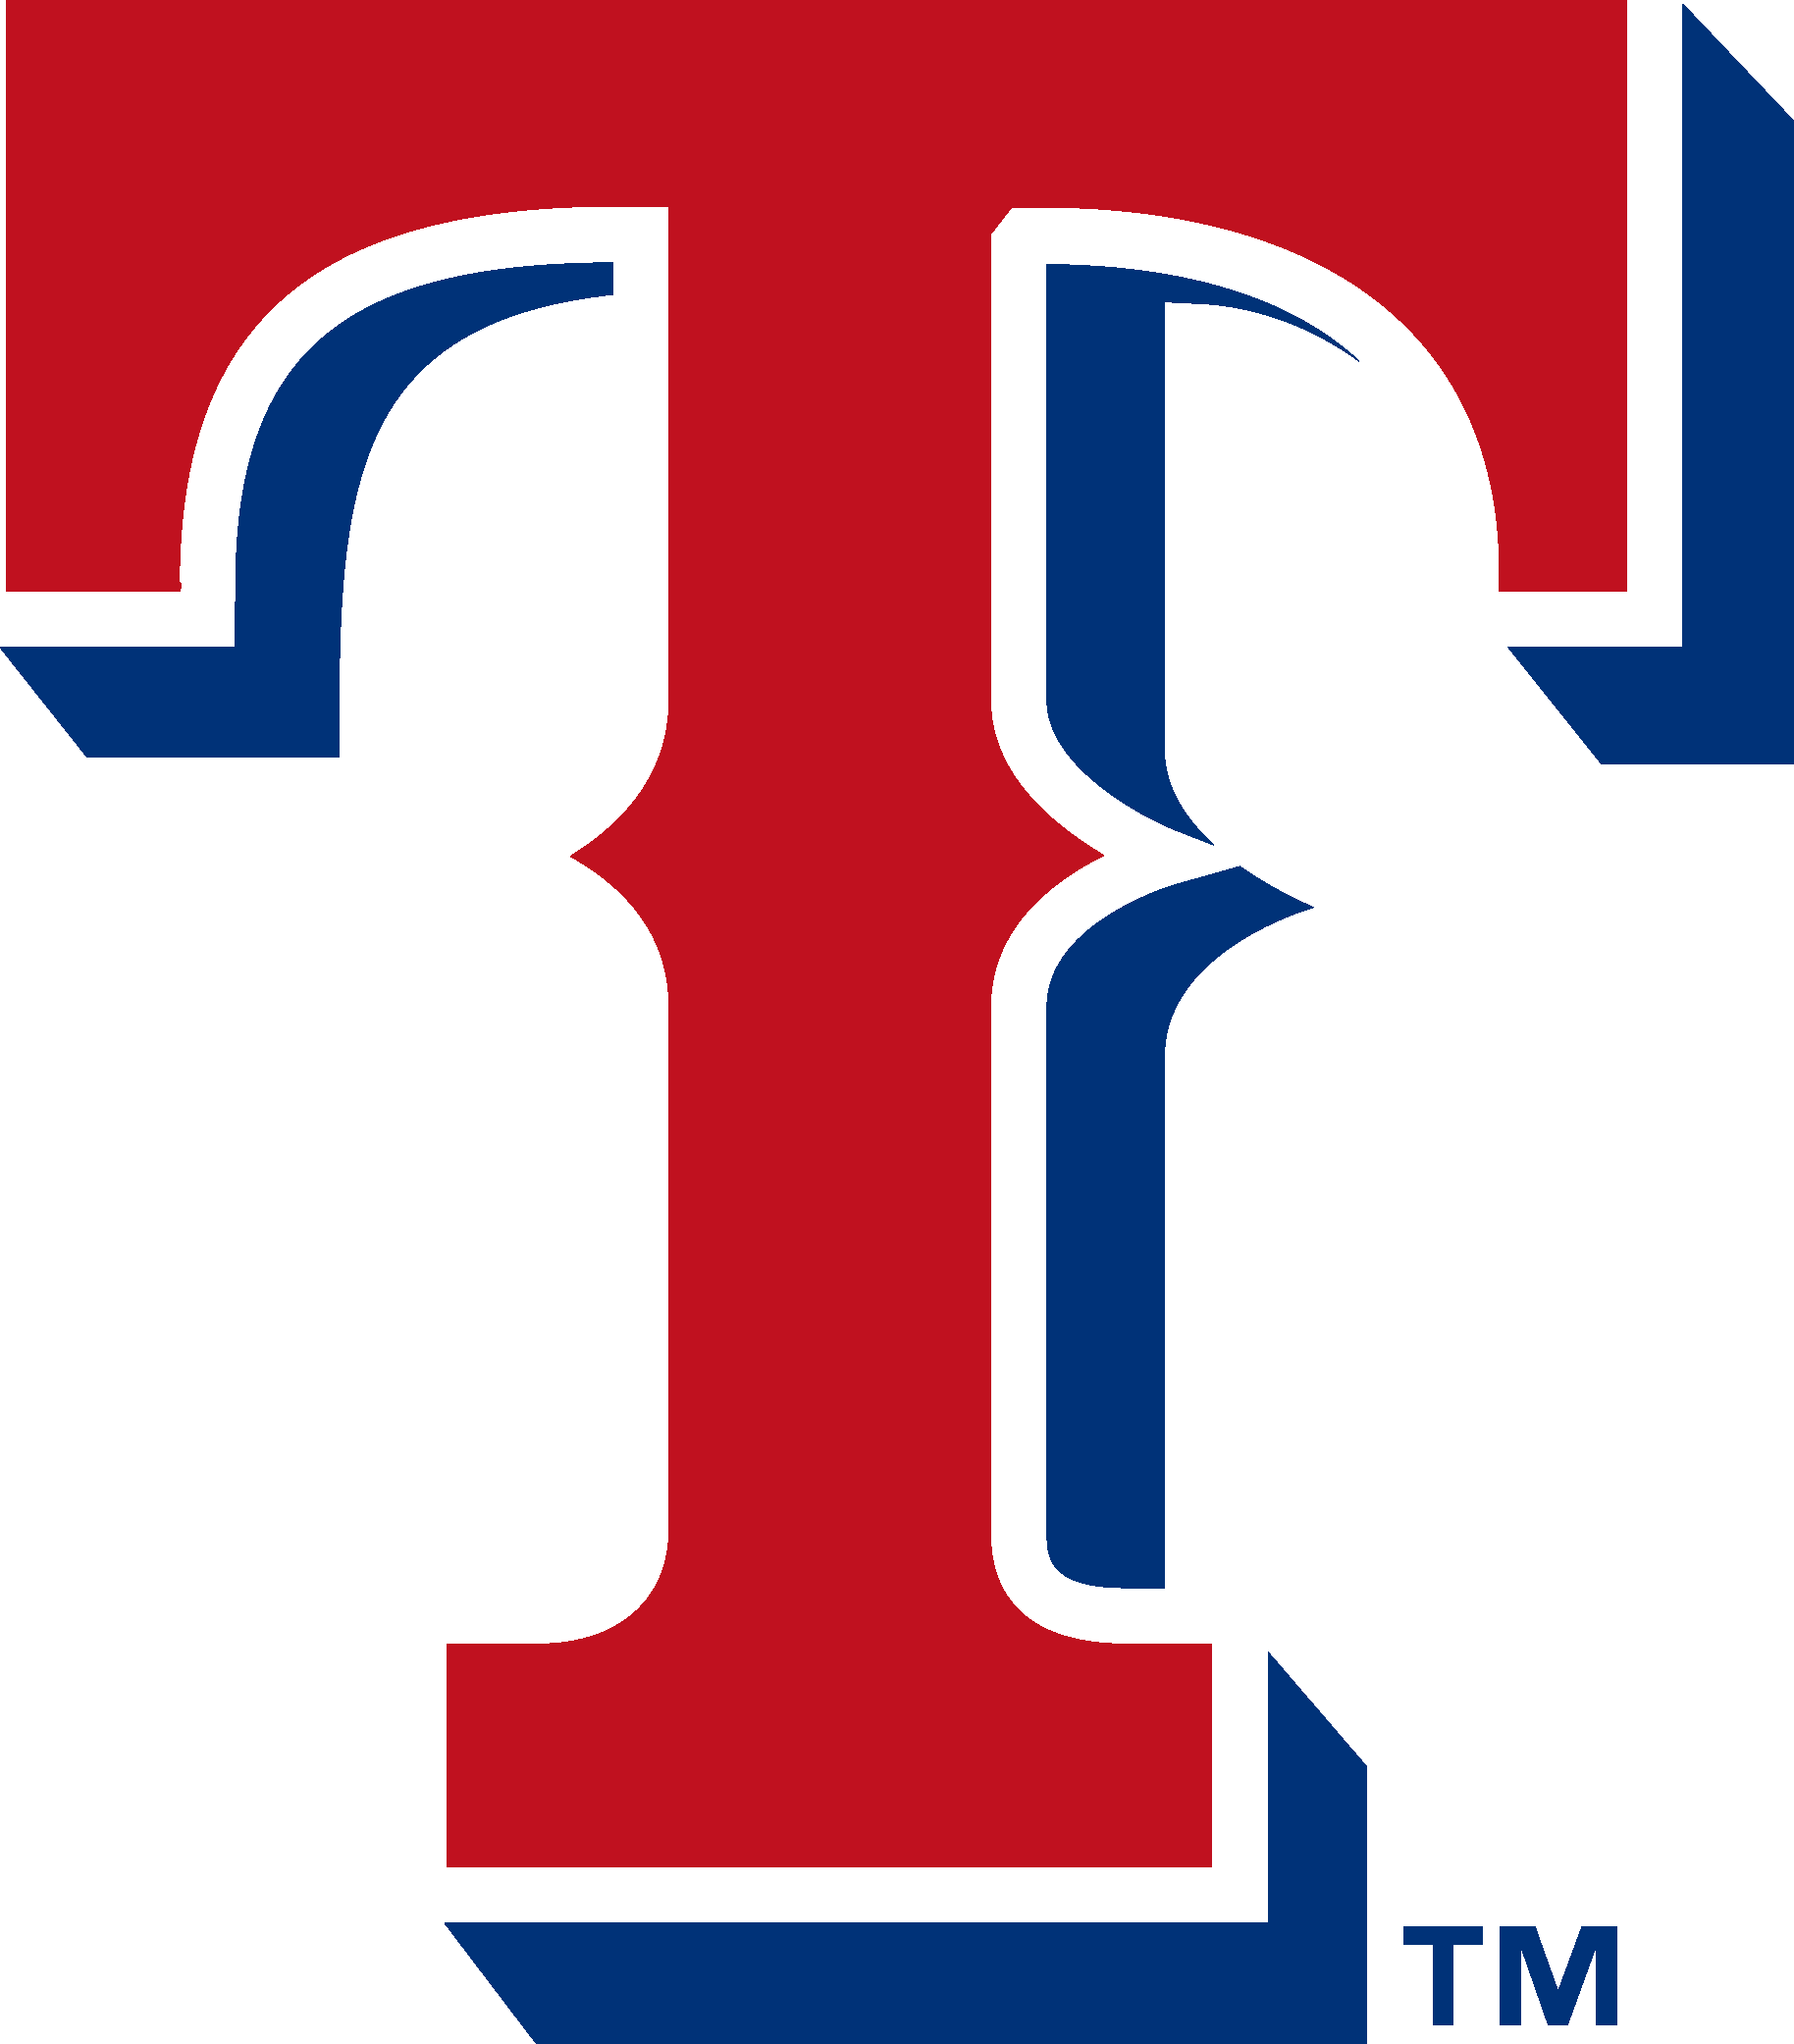 Texas Rangers Logo png